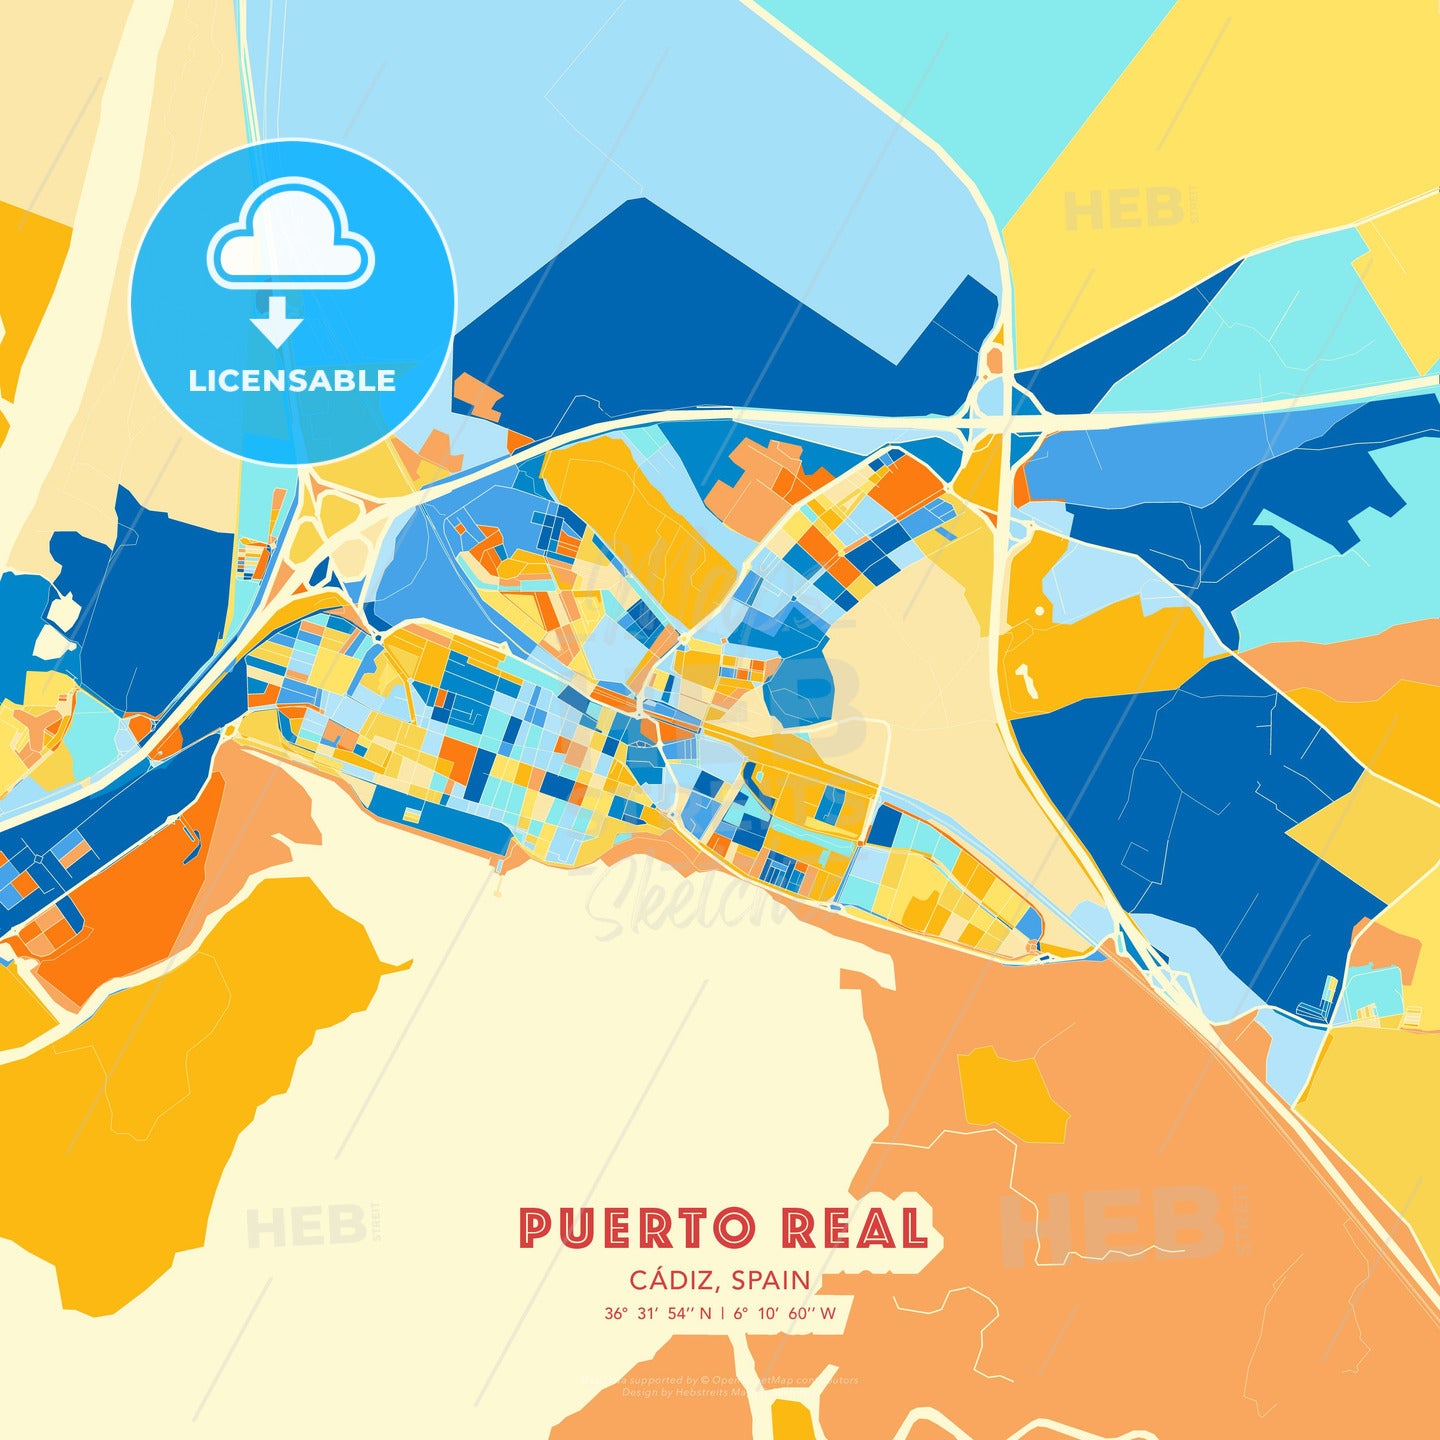 Puerto Real, Cádiz, Spain, map - HEBSTREITS Sketches